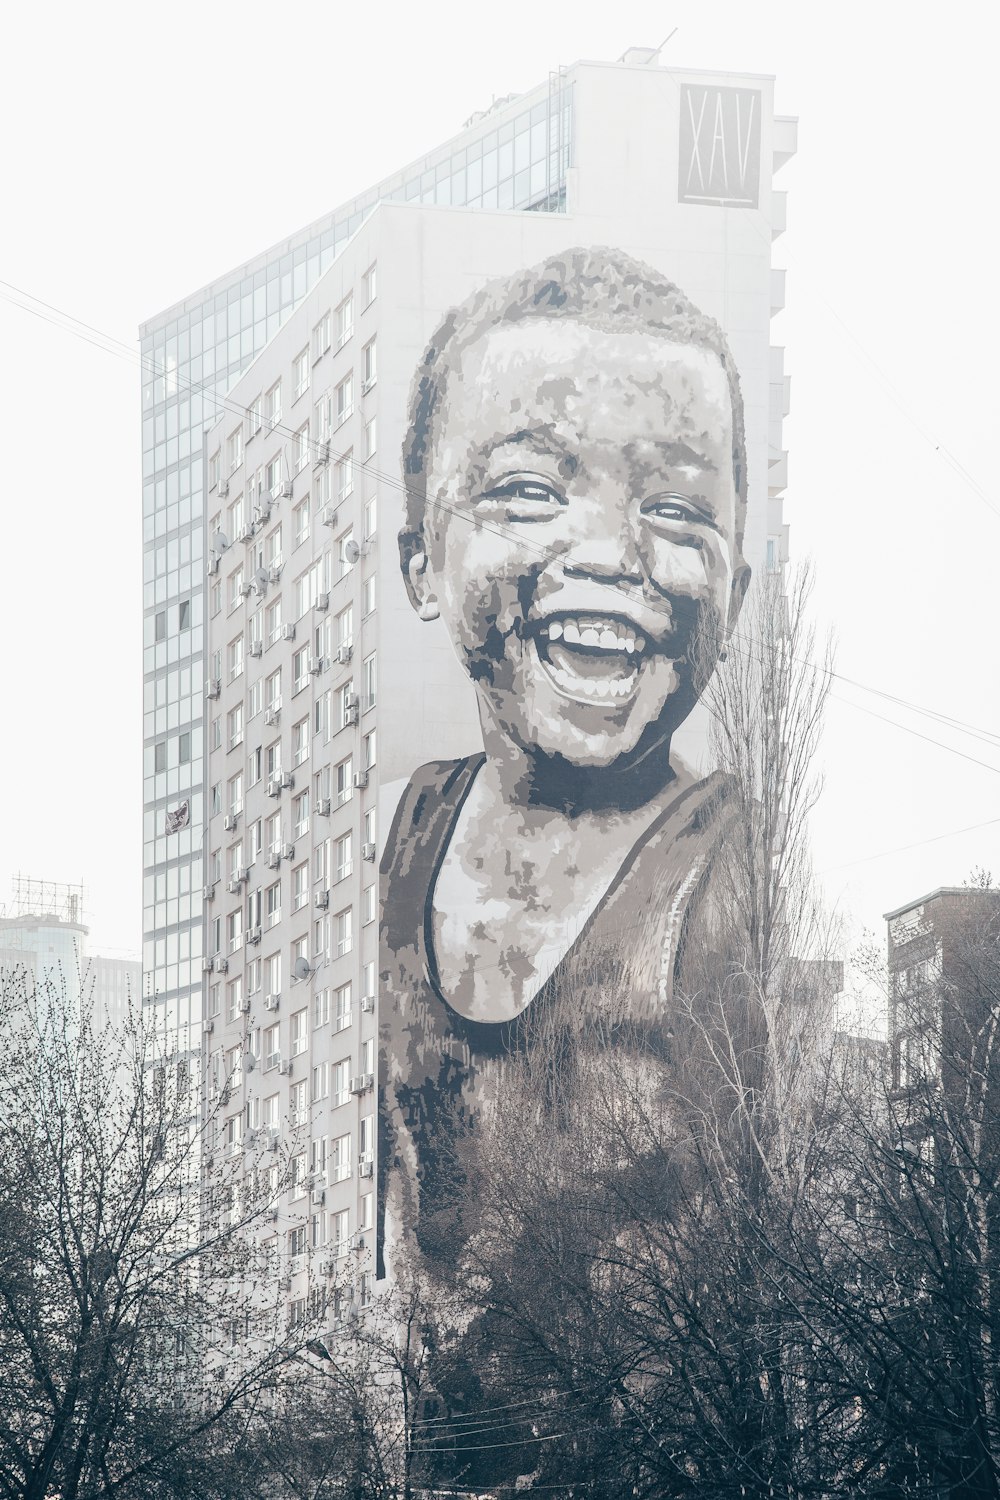 Kind lachende Graffiti-Kunst an der Wand